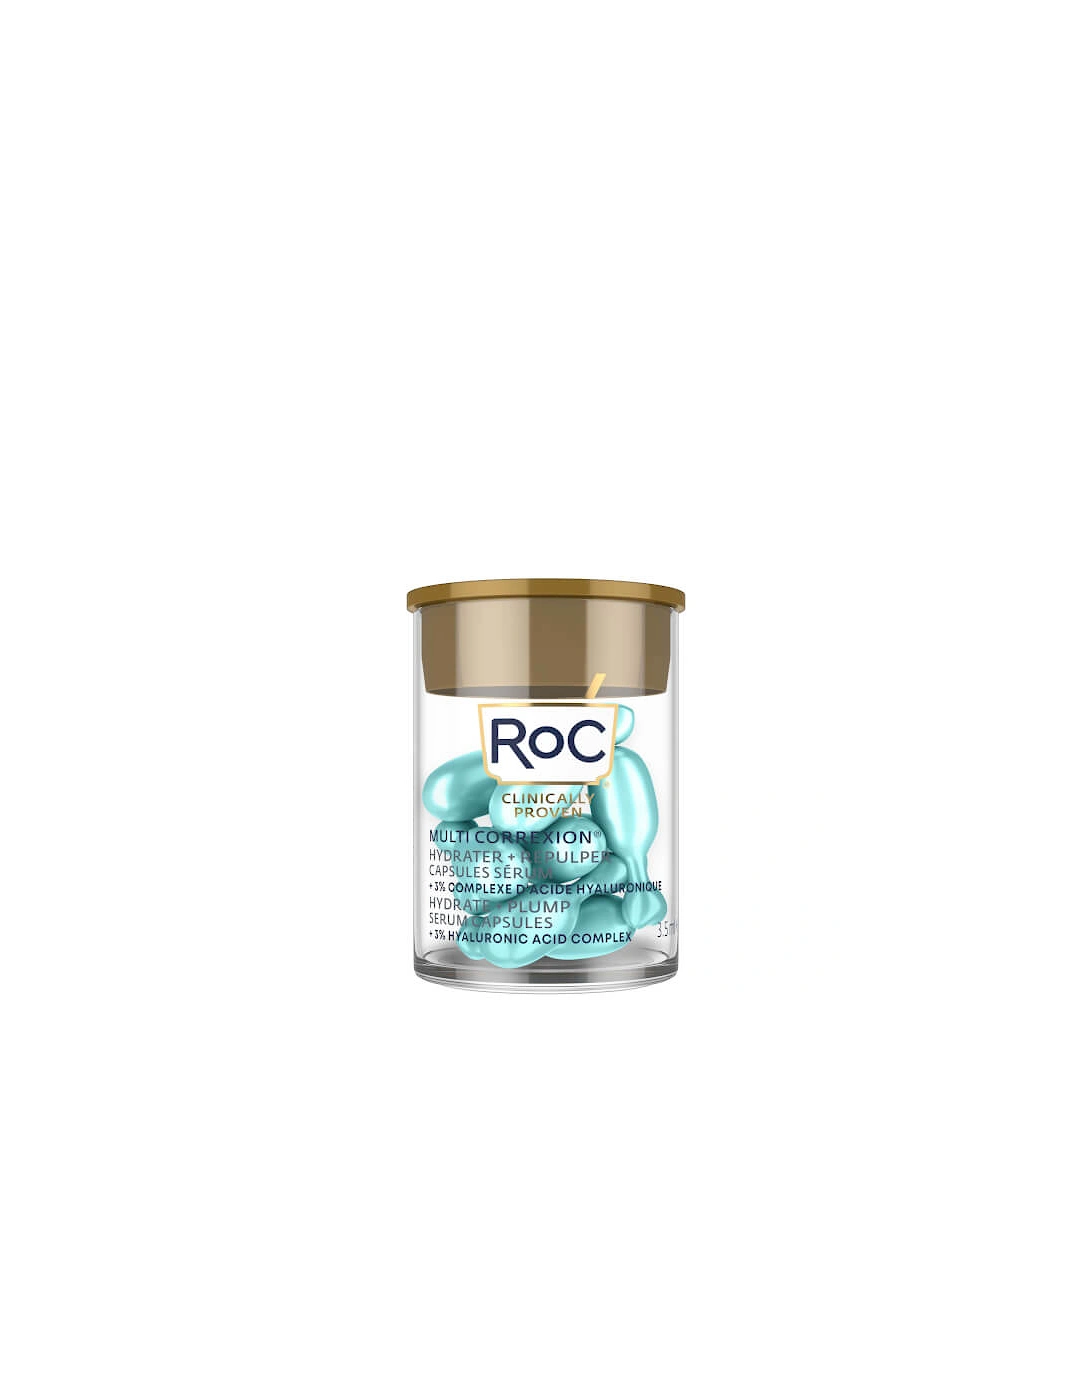 RoC Multi Correxion Hydrate and Plump Capsules - 10 Capsules, 2 of 1